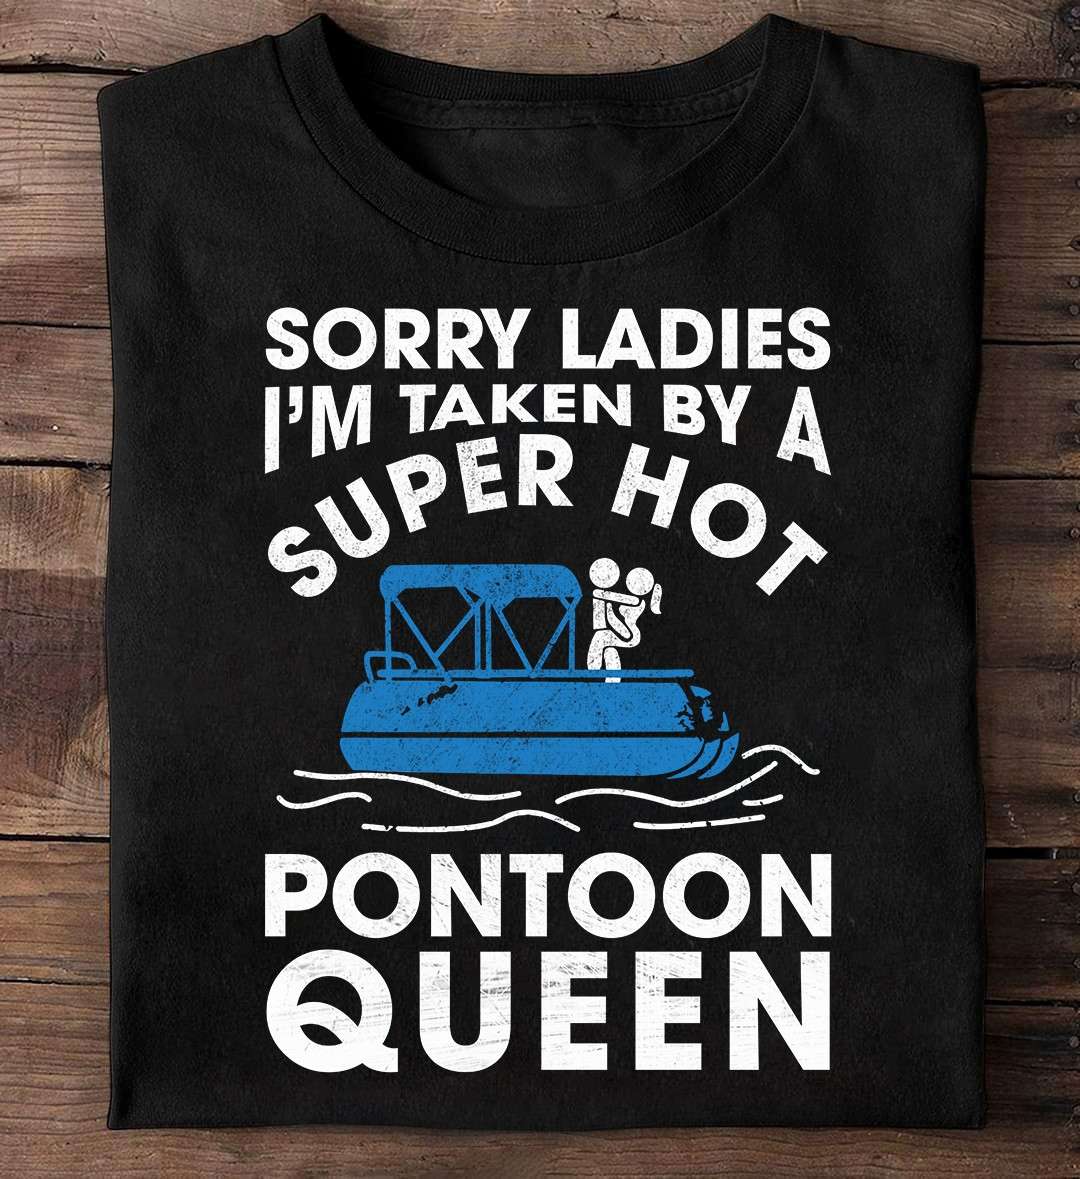 Sorry ladies, I'm taken by a super hot pontoon queen - Pontooning partner, pontooning the hobby